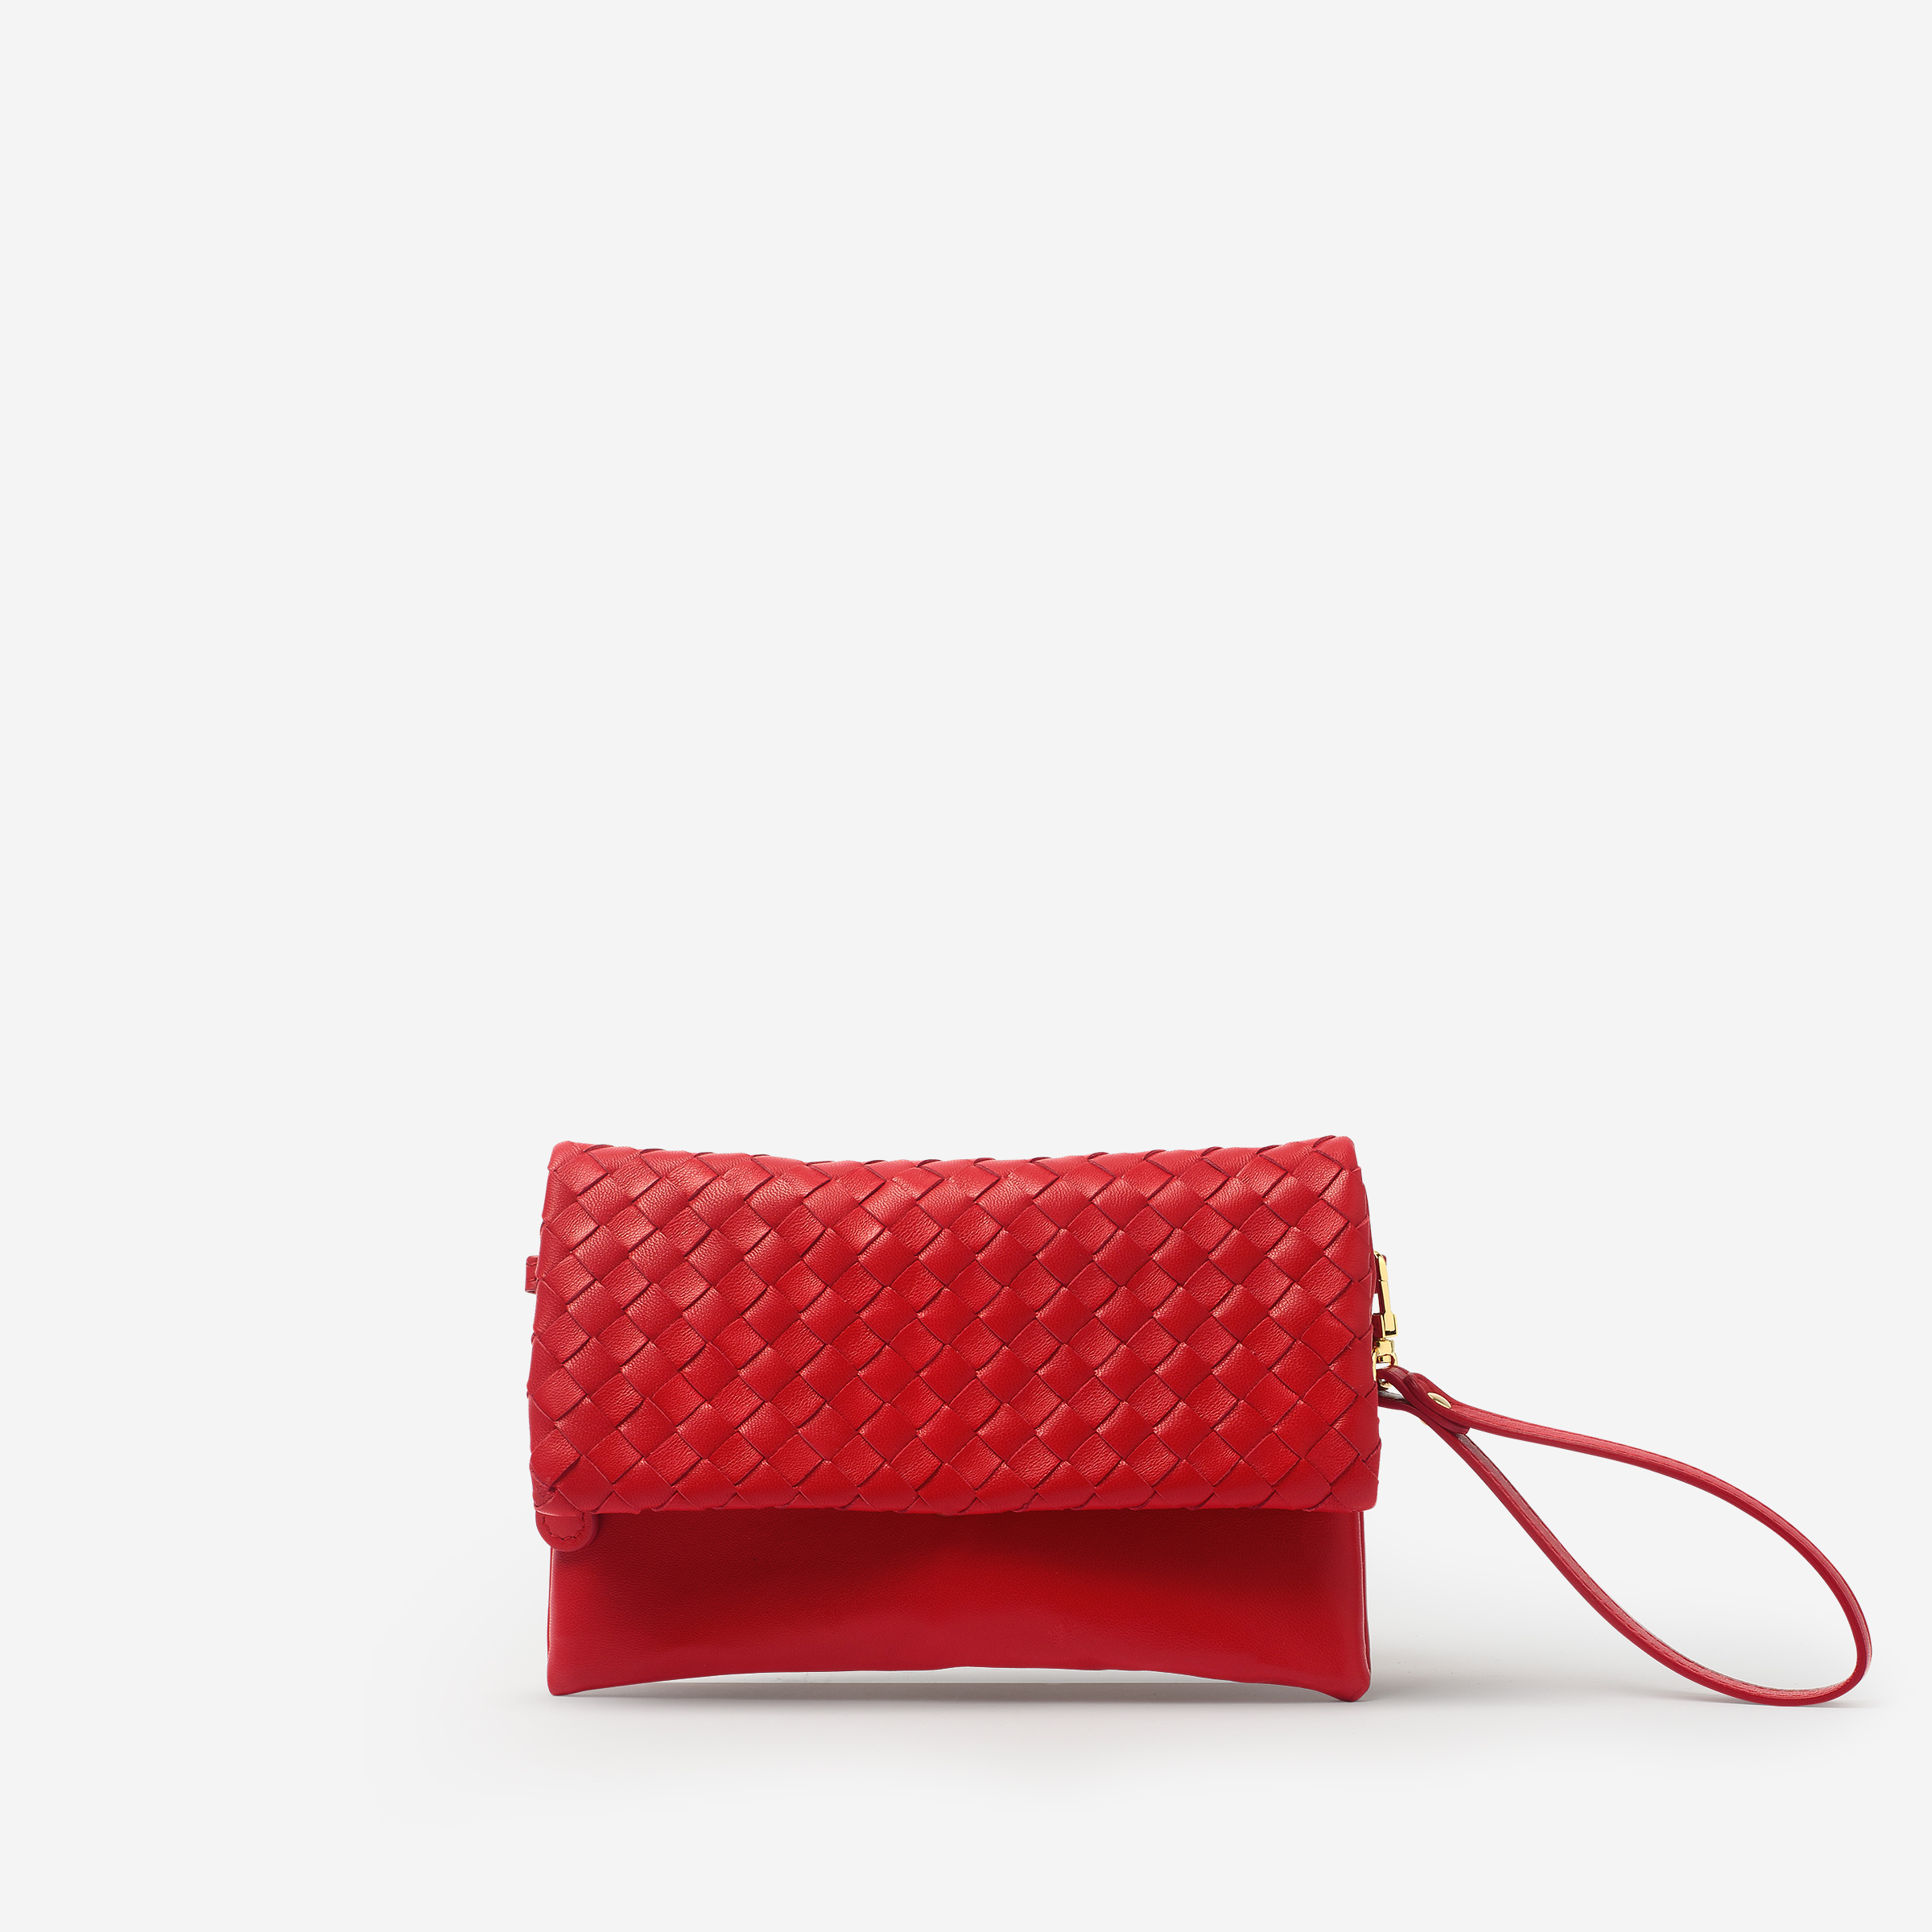 Ambra, Italian Leather Bag